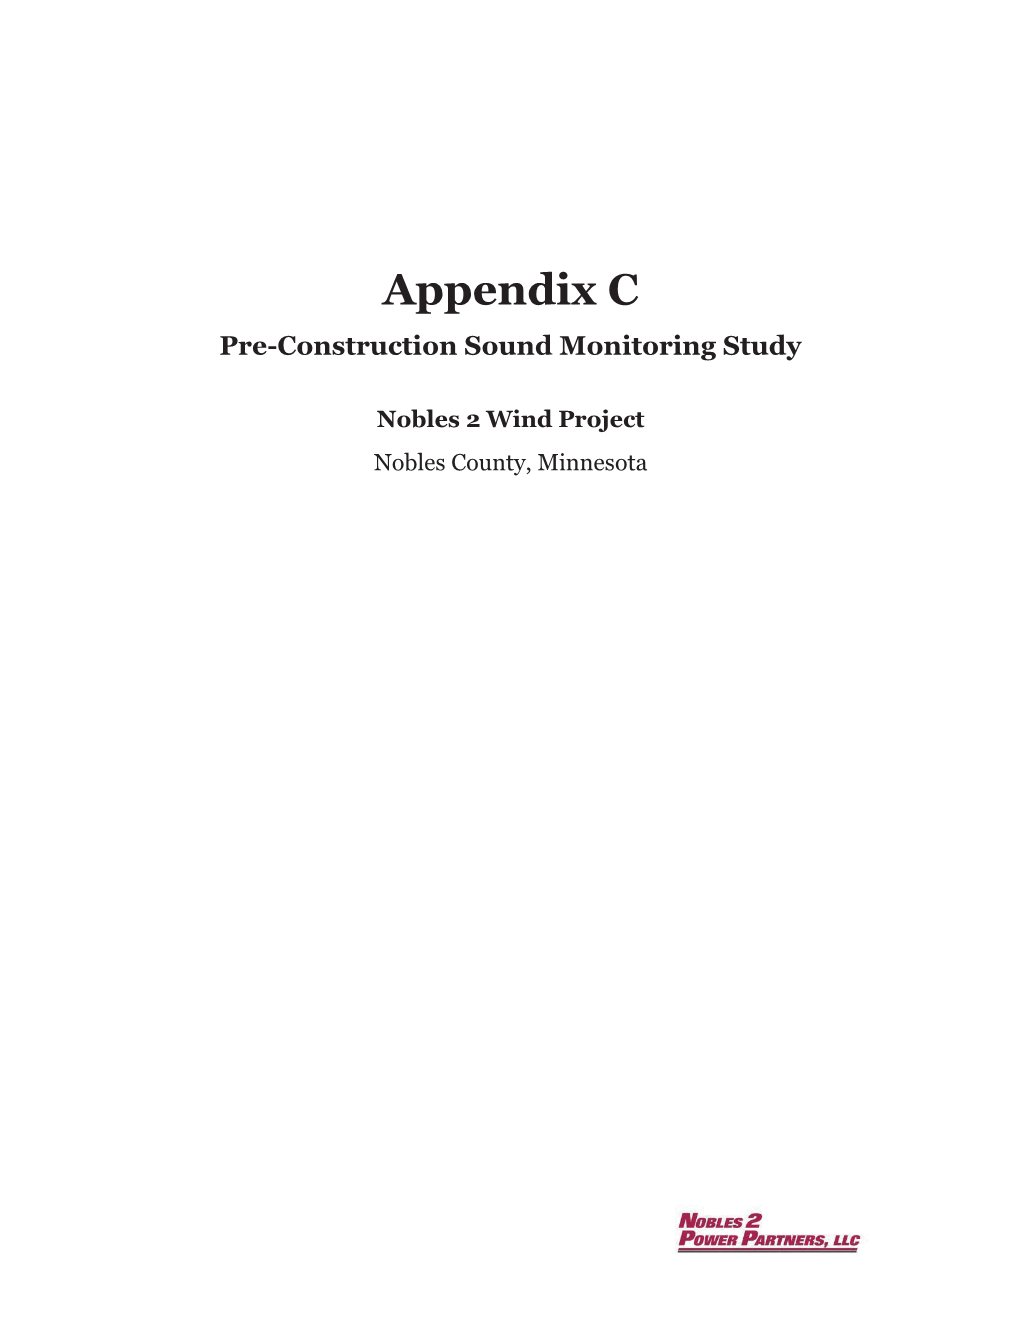 Appendix C Pre-Construction Sound Monitoring Study